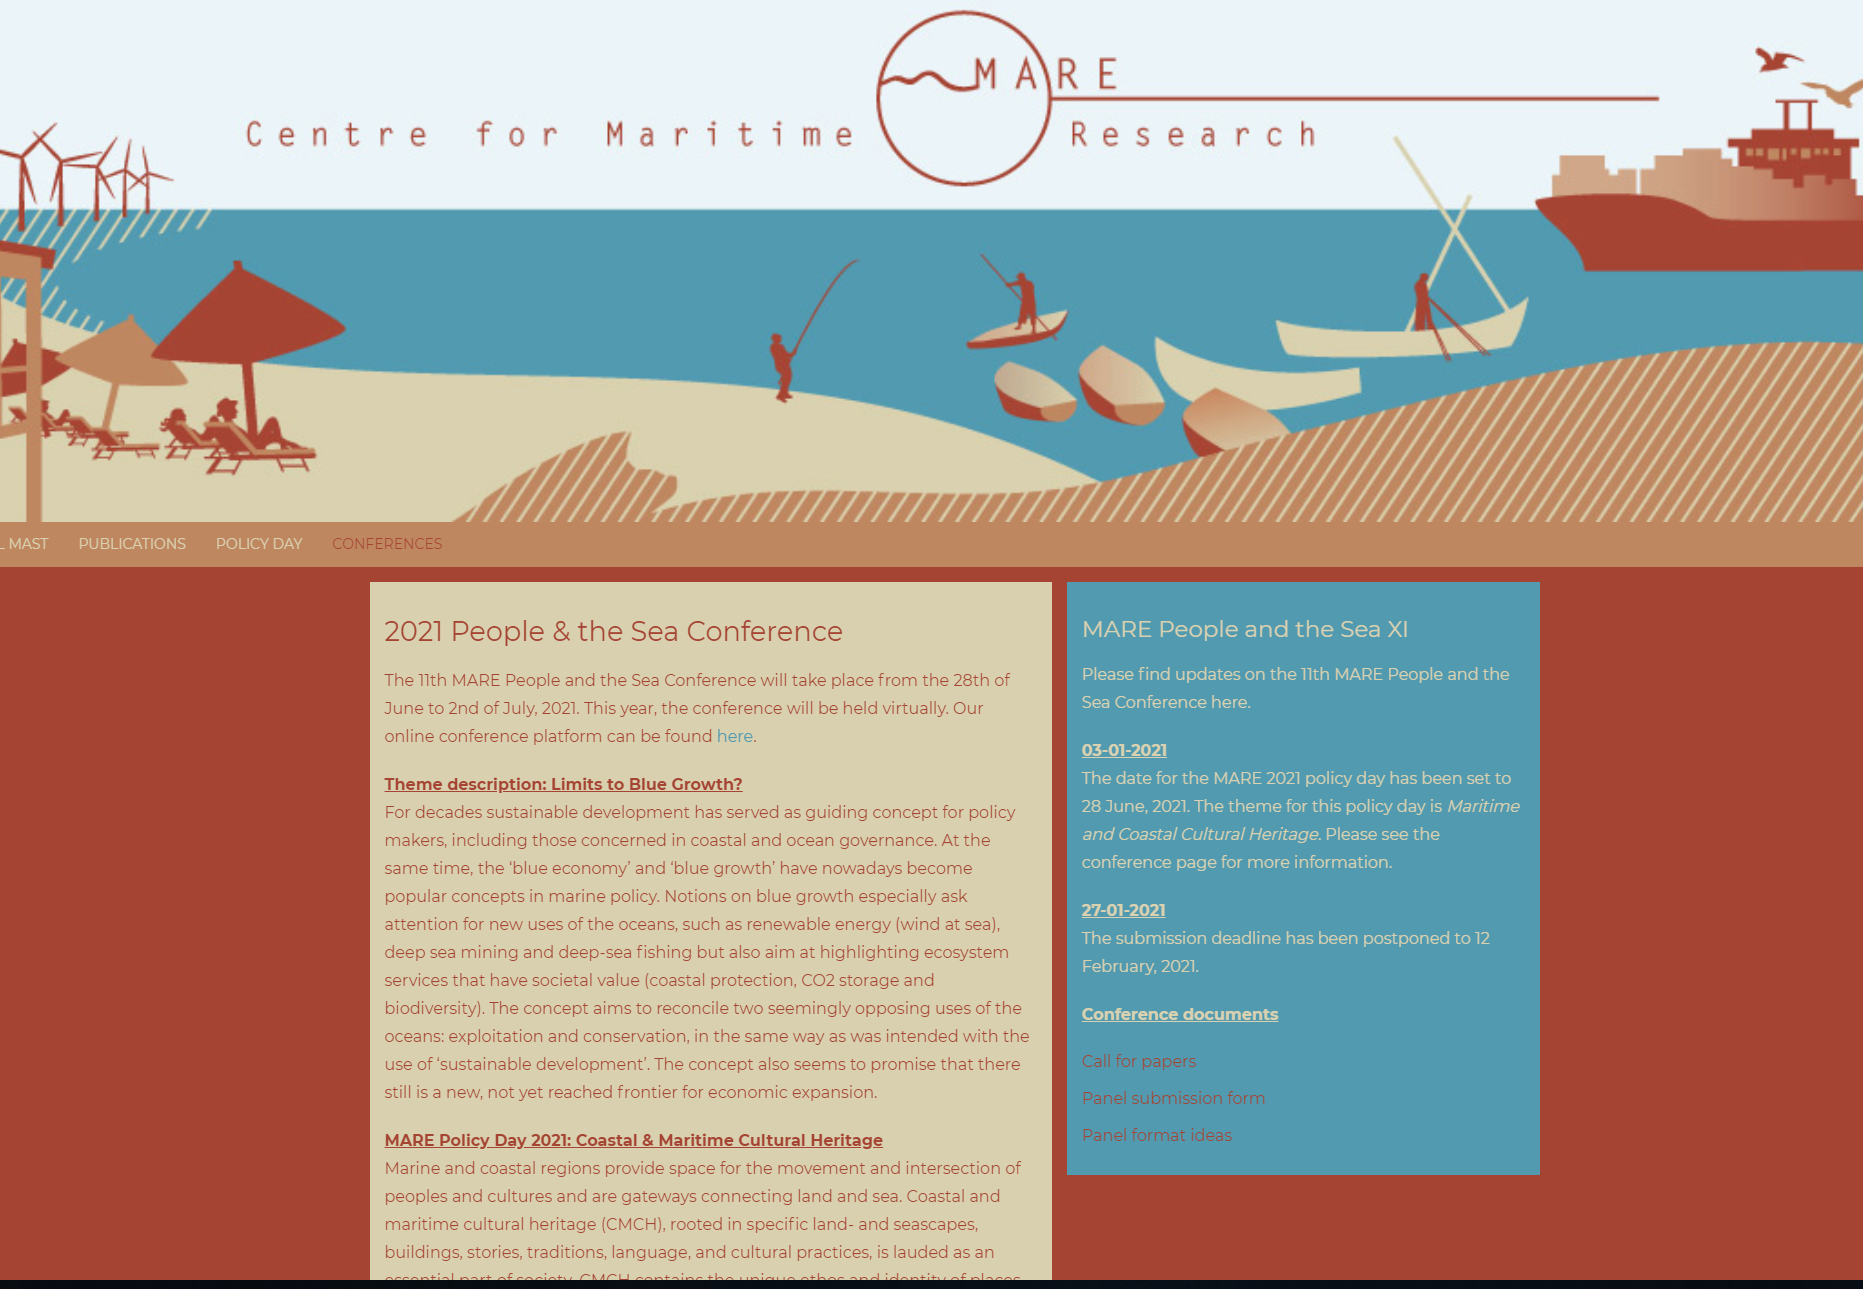 PERICLES planning International virtual seminar on Coastal & Maritime Cultural Heritage